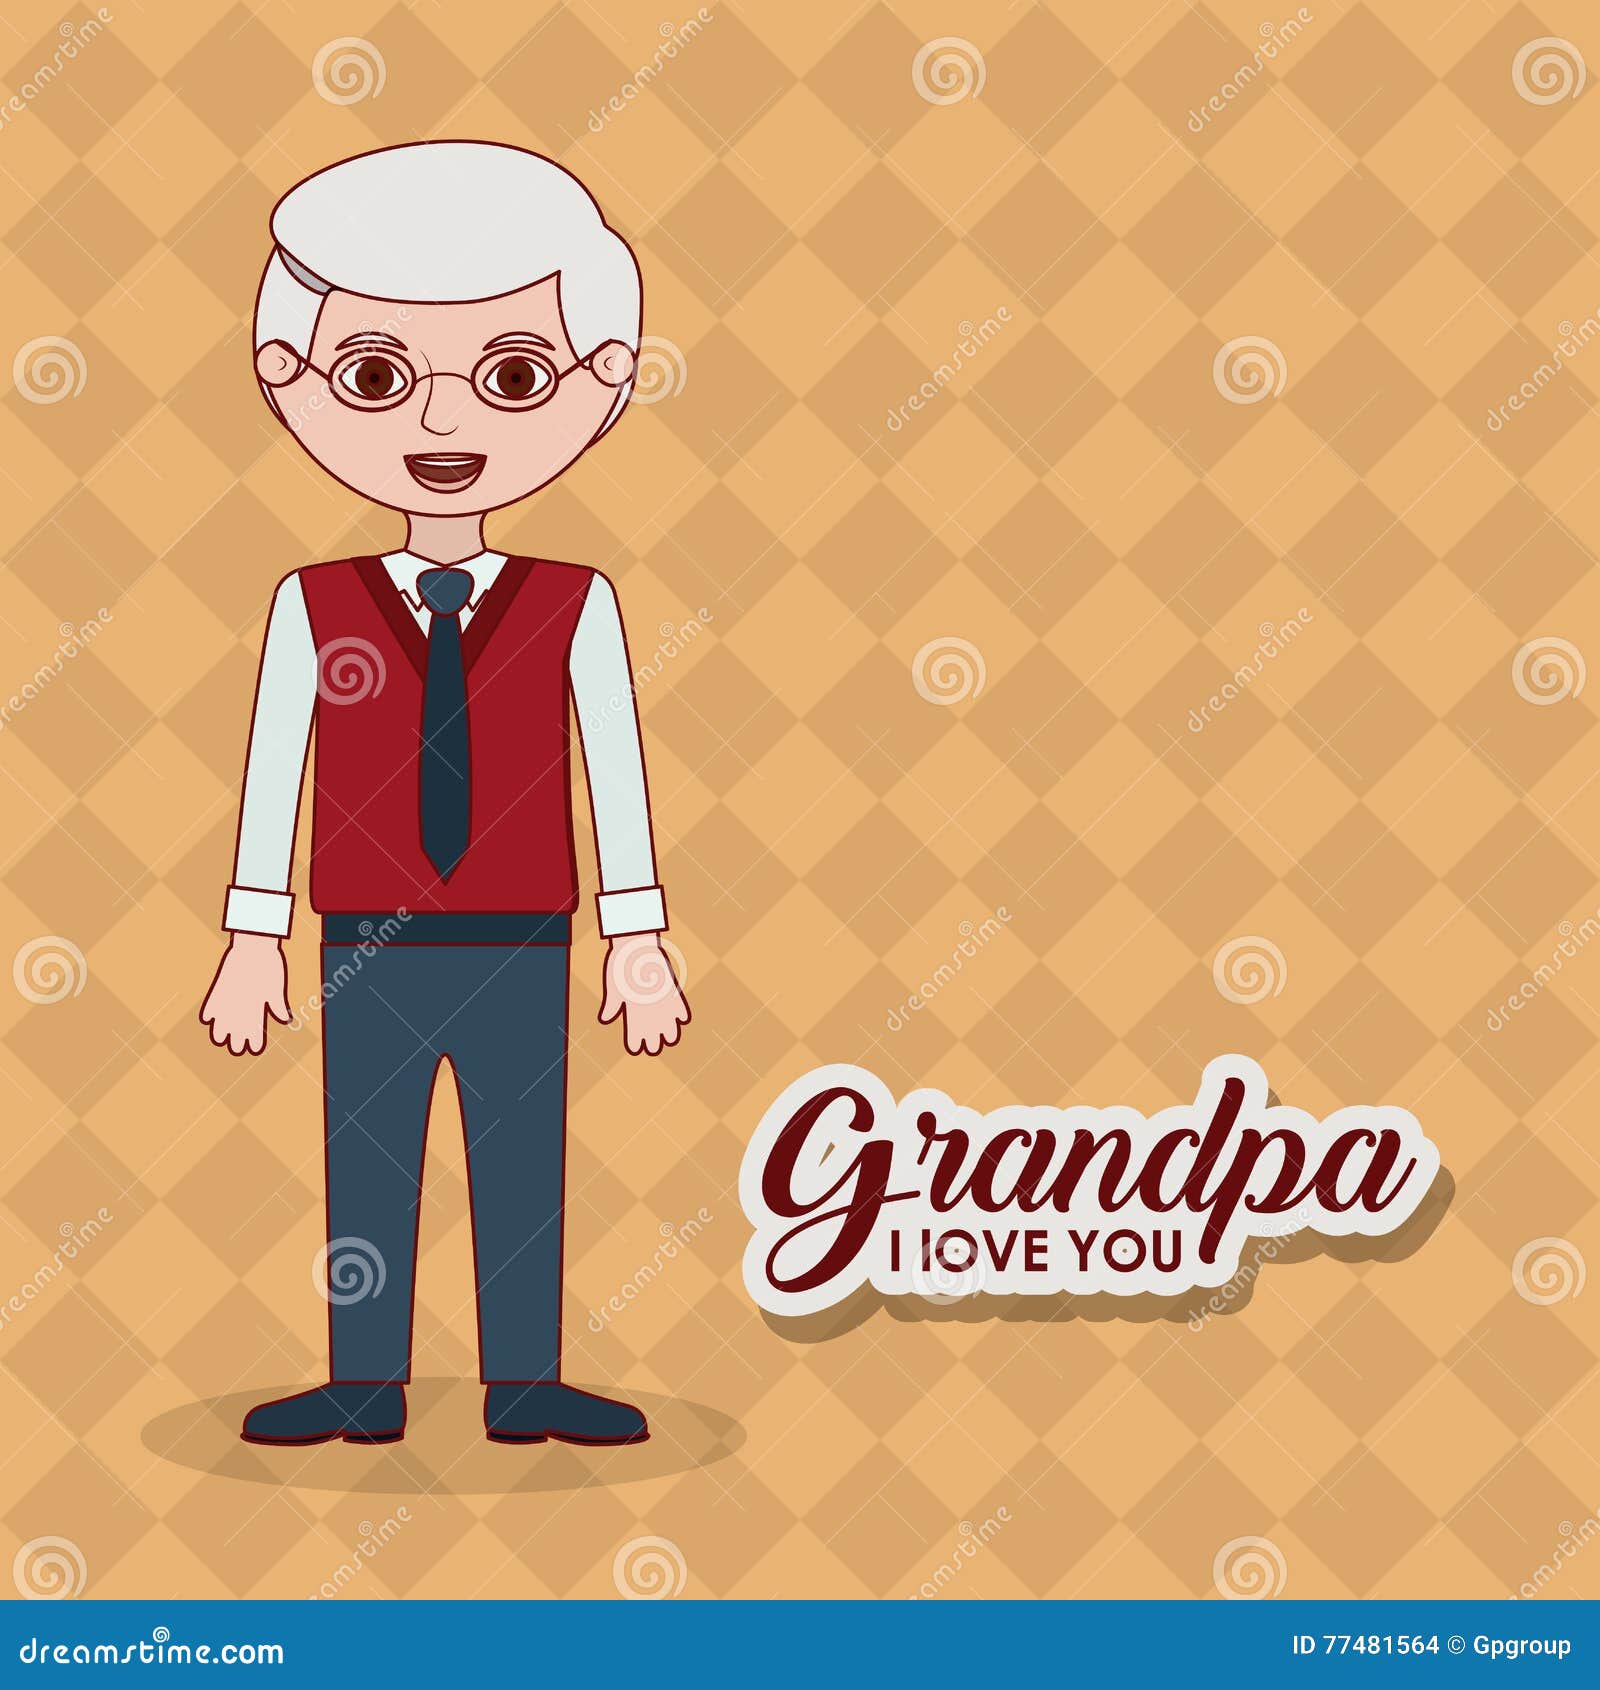 Download Grandfather Grandpa Cartoon Design Stock Vector ...